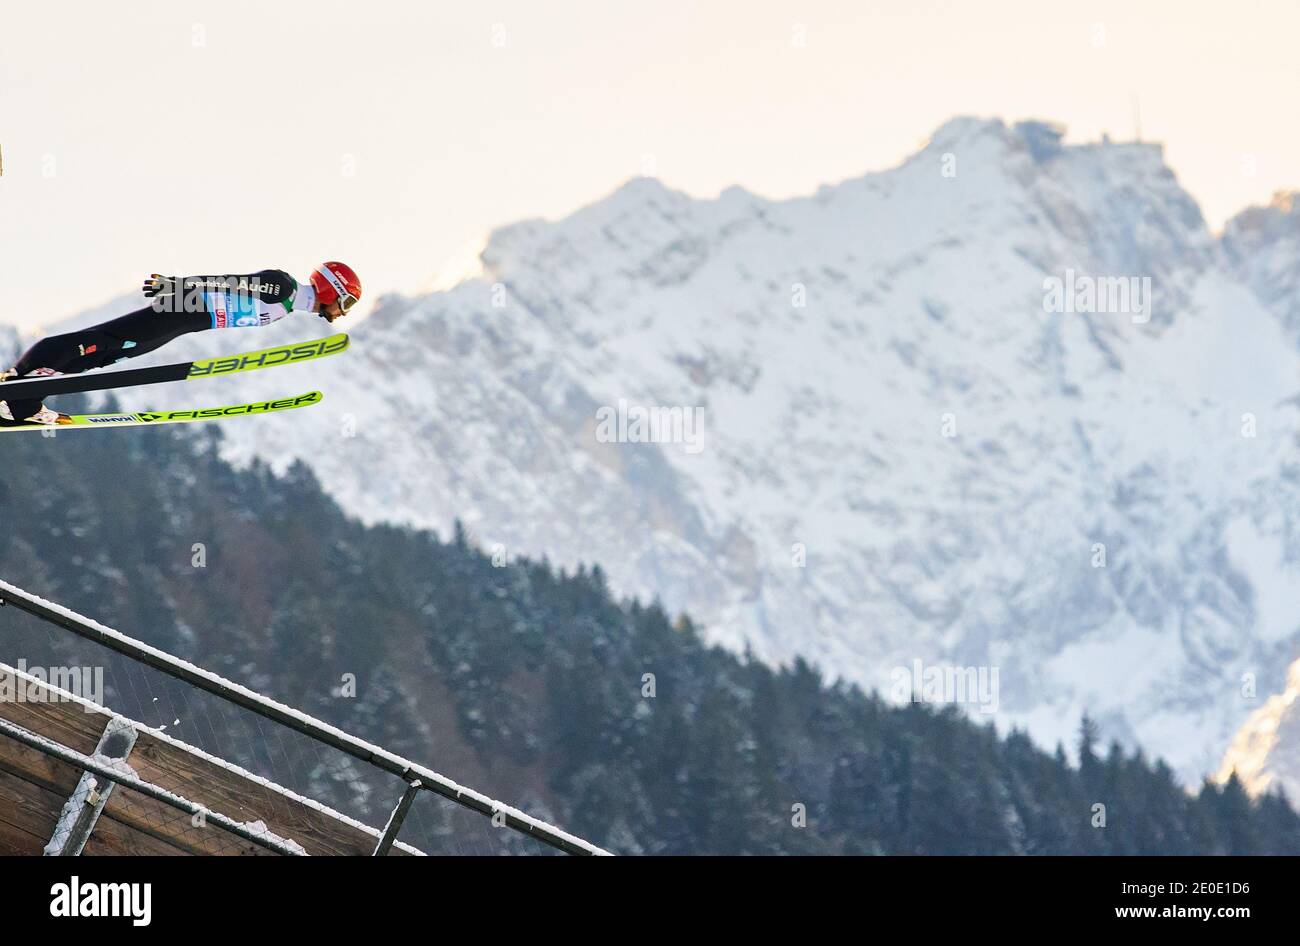 Markus EISENBICHLER, GER  in action in front of Zugspitze mountain at the Four Hills Tournament Ski Jumping at Olympic Stadium, Grosse Olympiaschanze in Garmisch-Partenkirchen, Bavaria, Germany, December 31, 2020.  © Peter Schatz / Alamy Live News Stock Photo